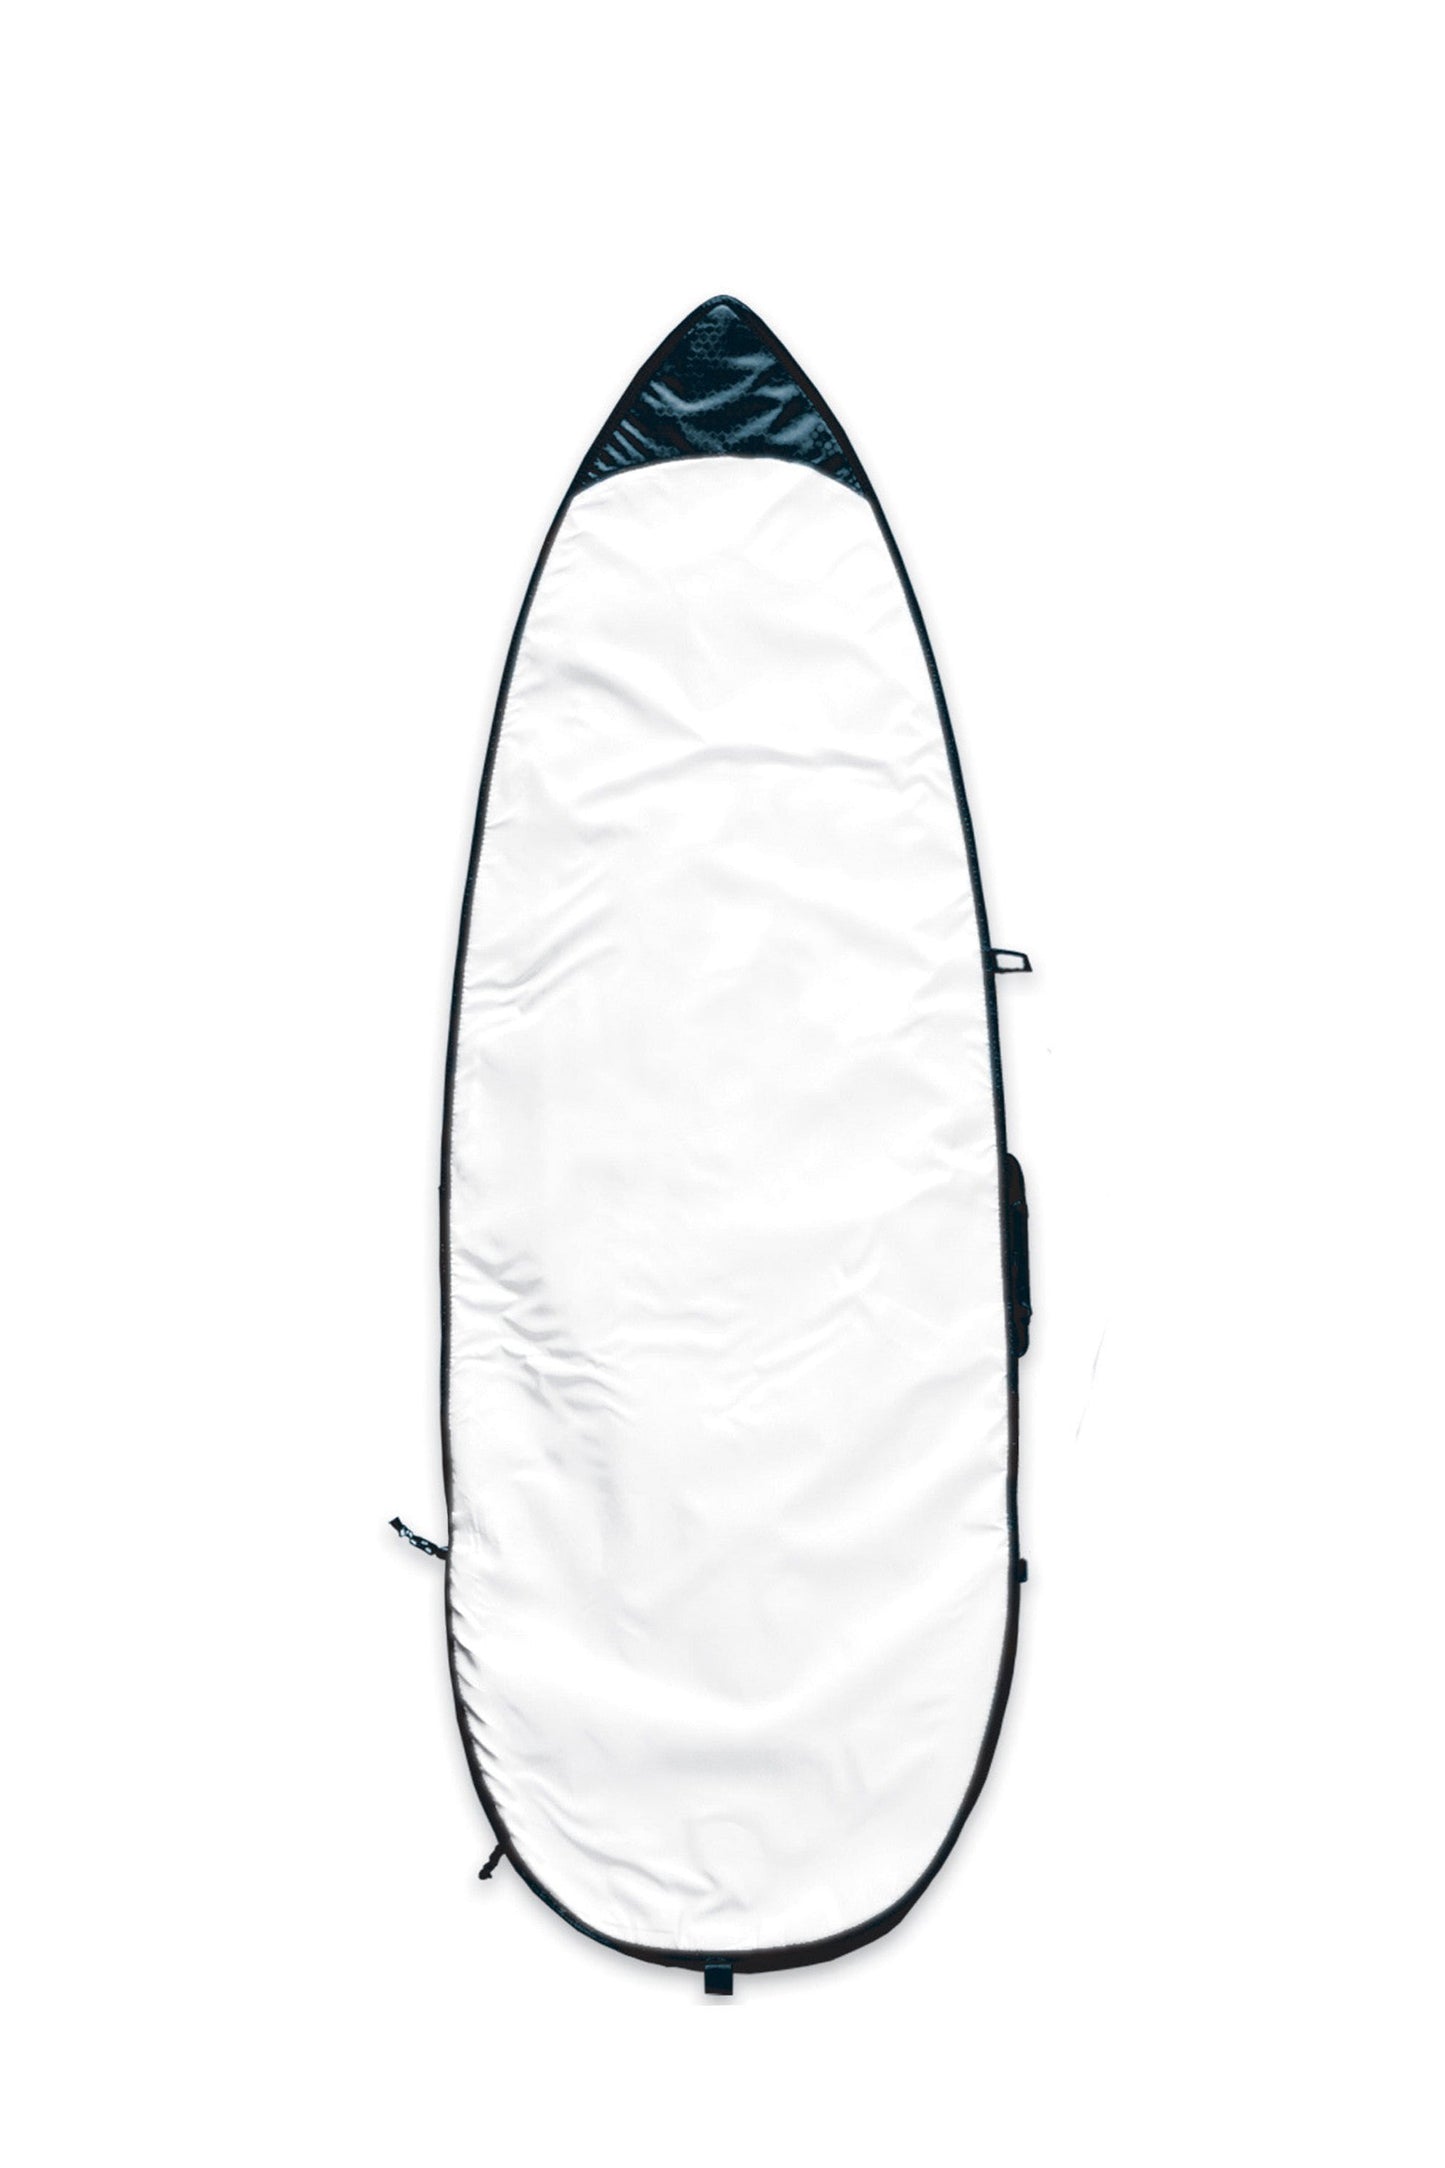    Pukas-Surf-Shop-Channel-Island-feather-light-shortboard-6.0